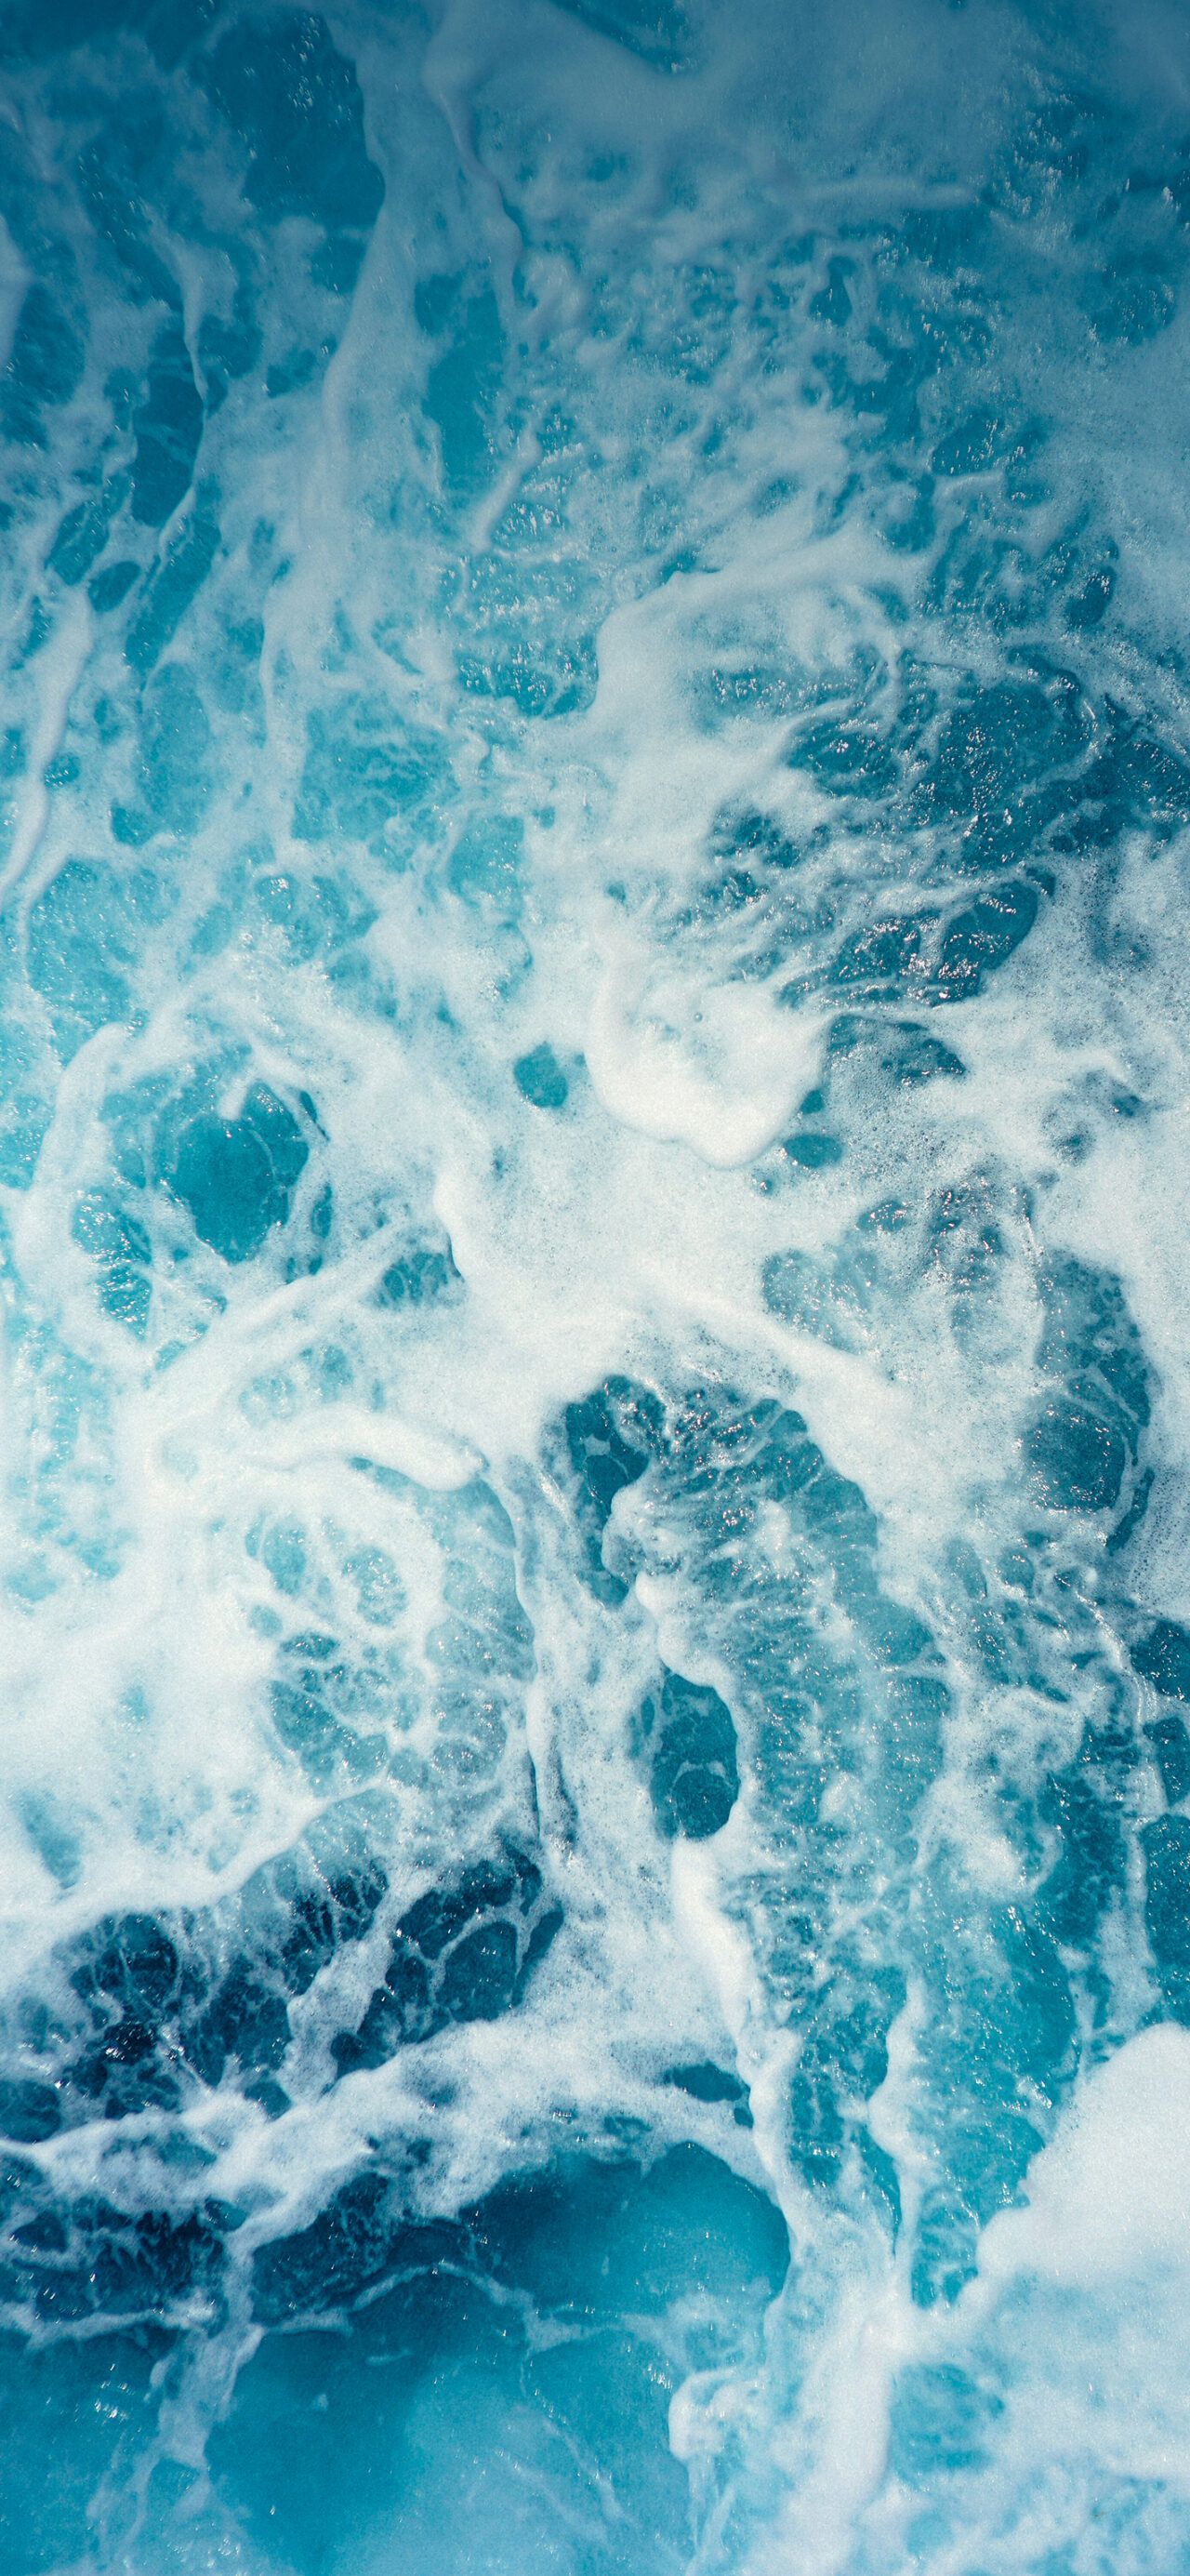 A blue and white ocean wave - Ocean